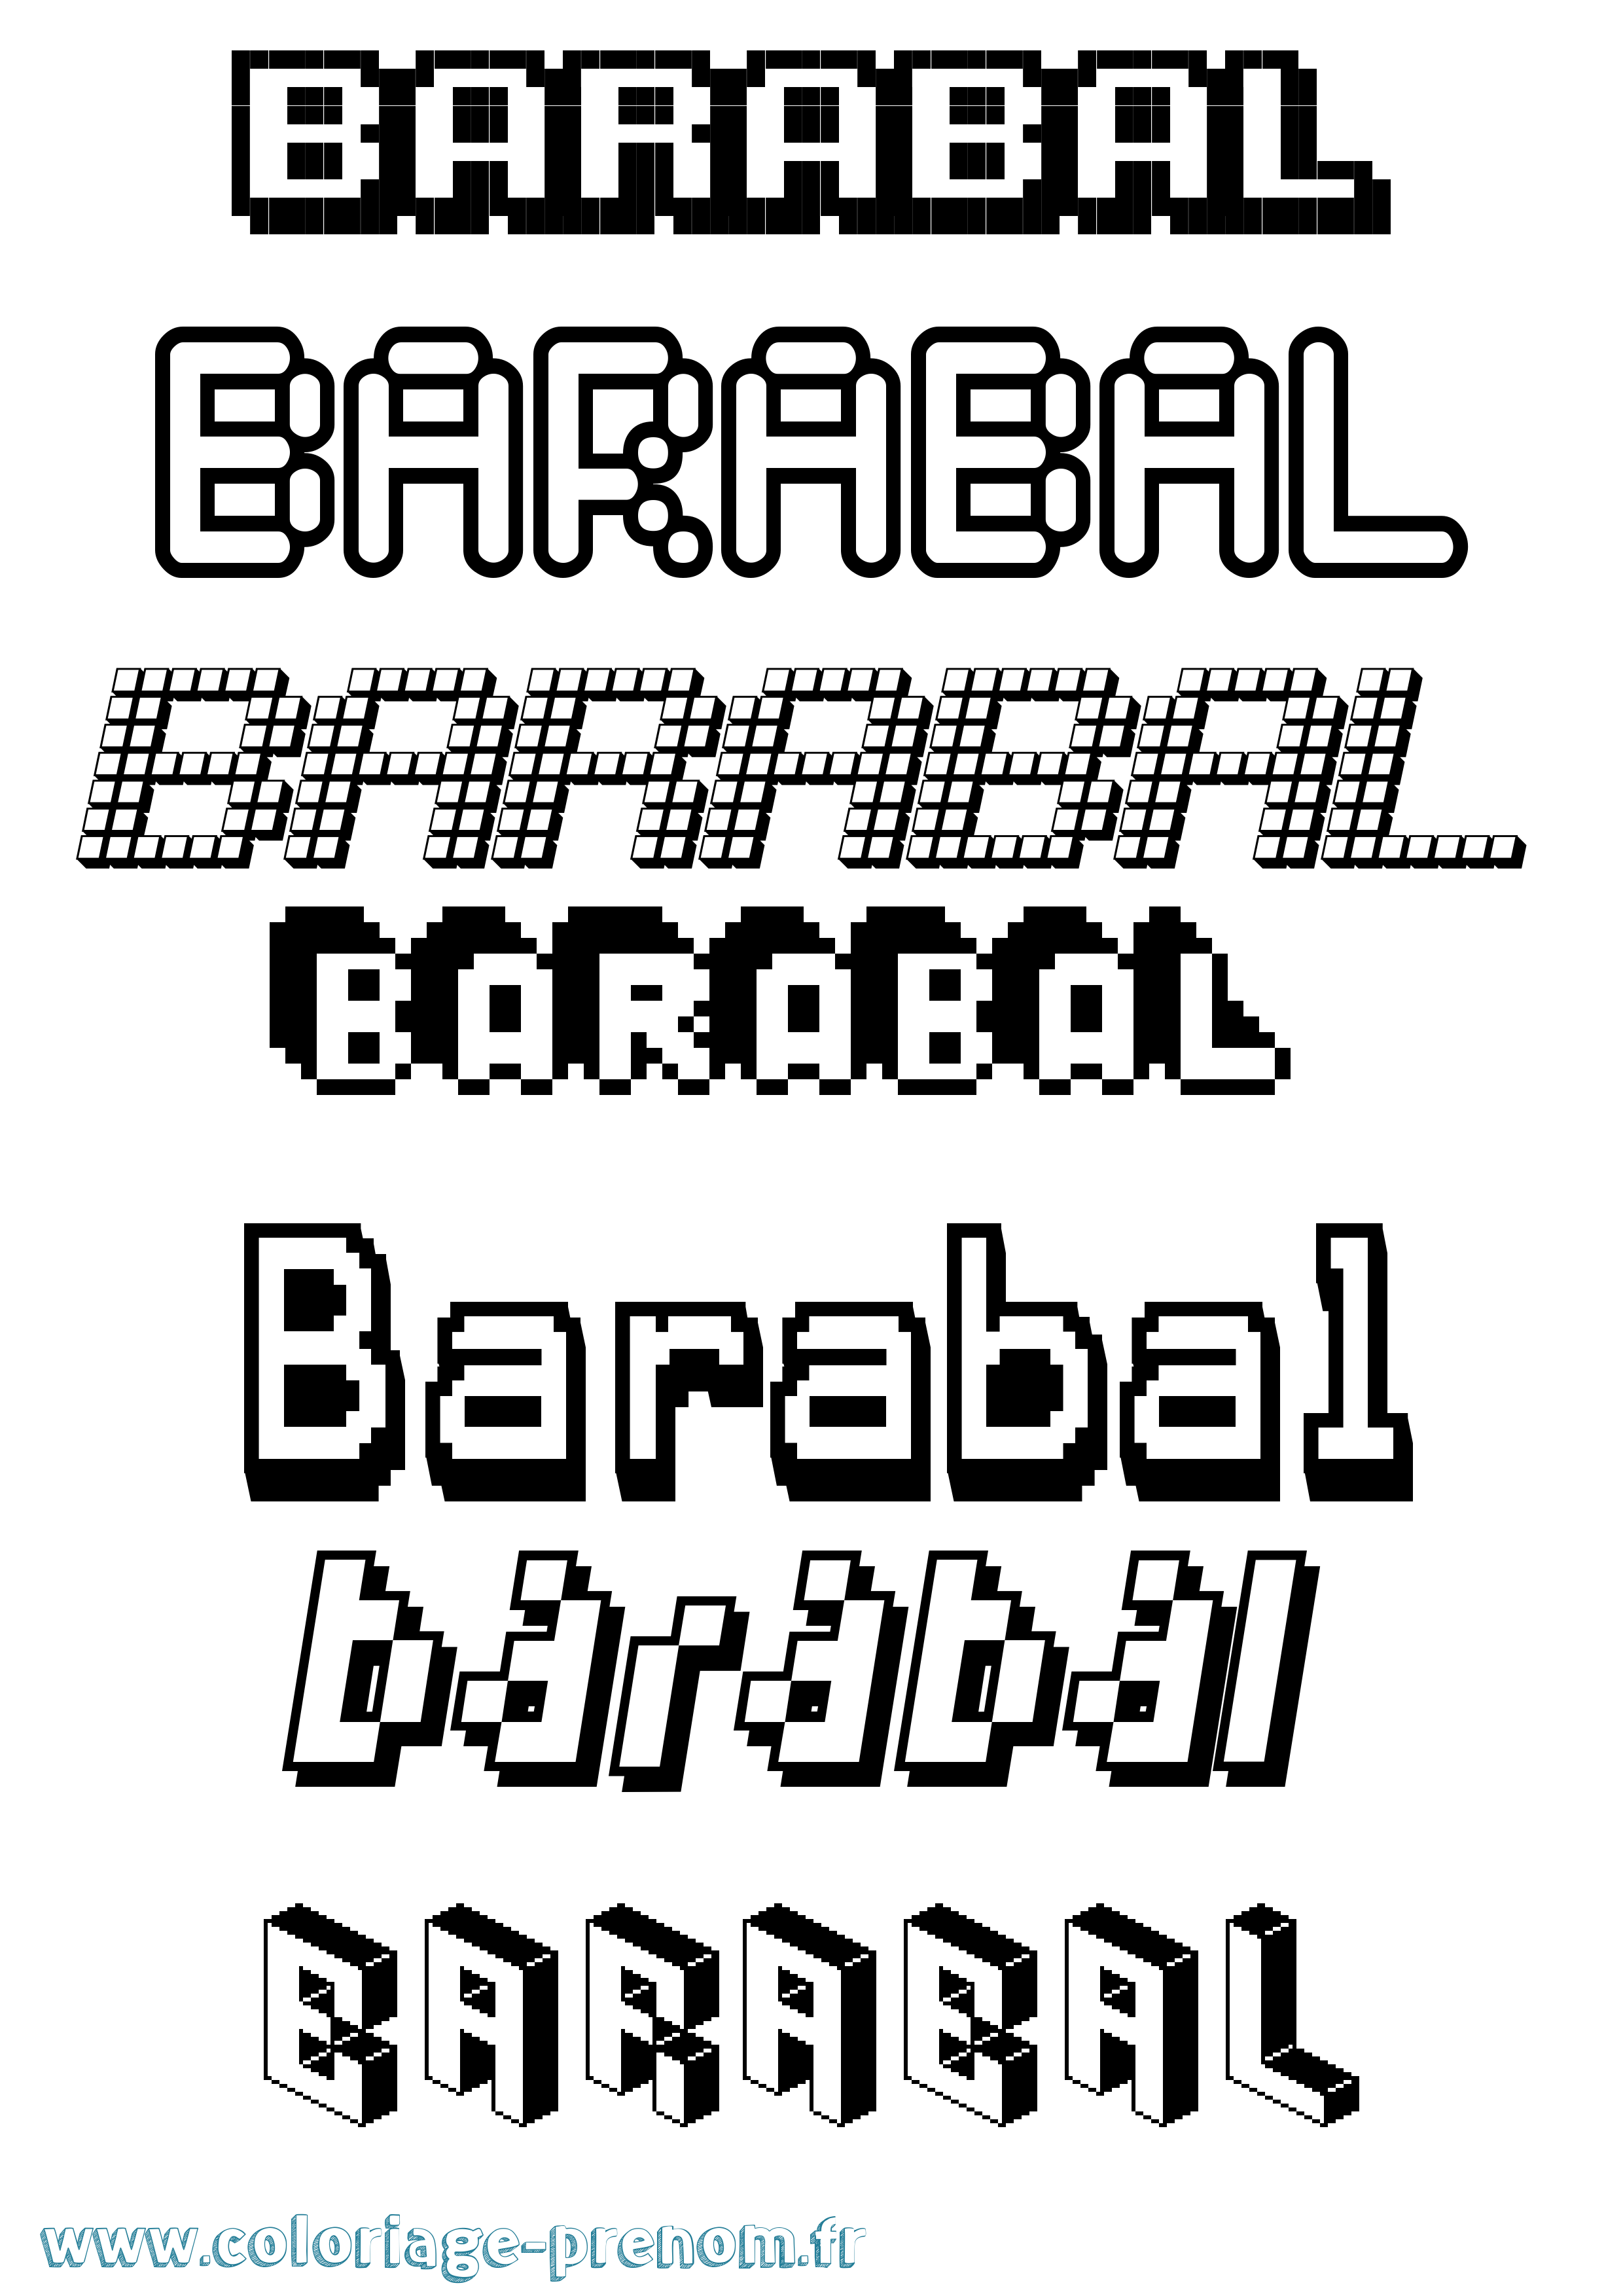 Coloriage prénom Barabal Pixel